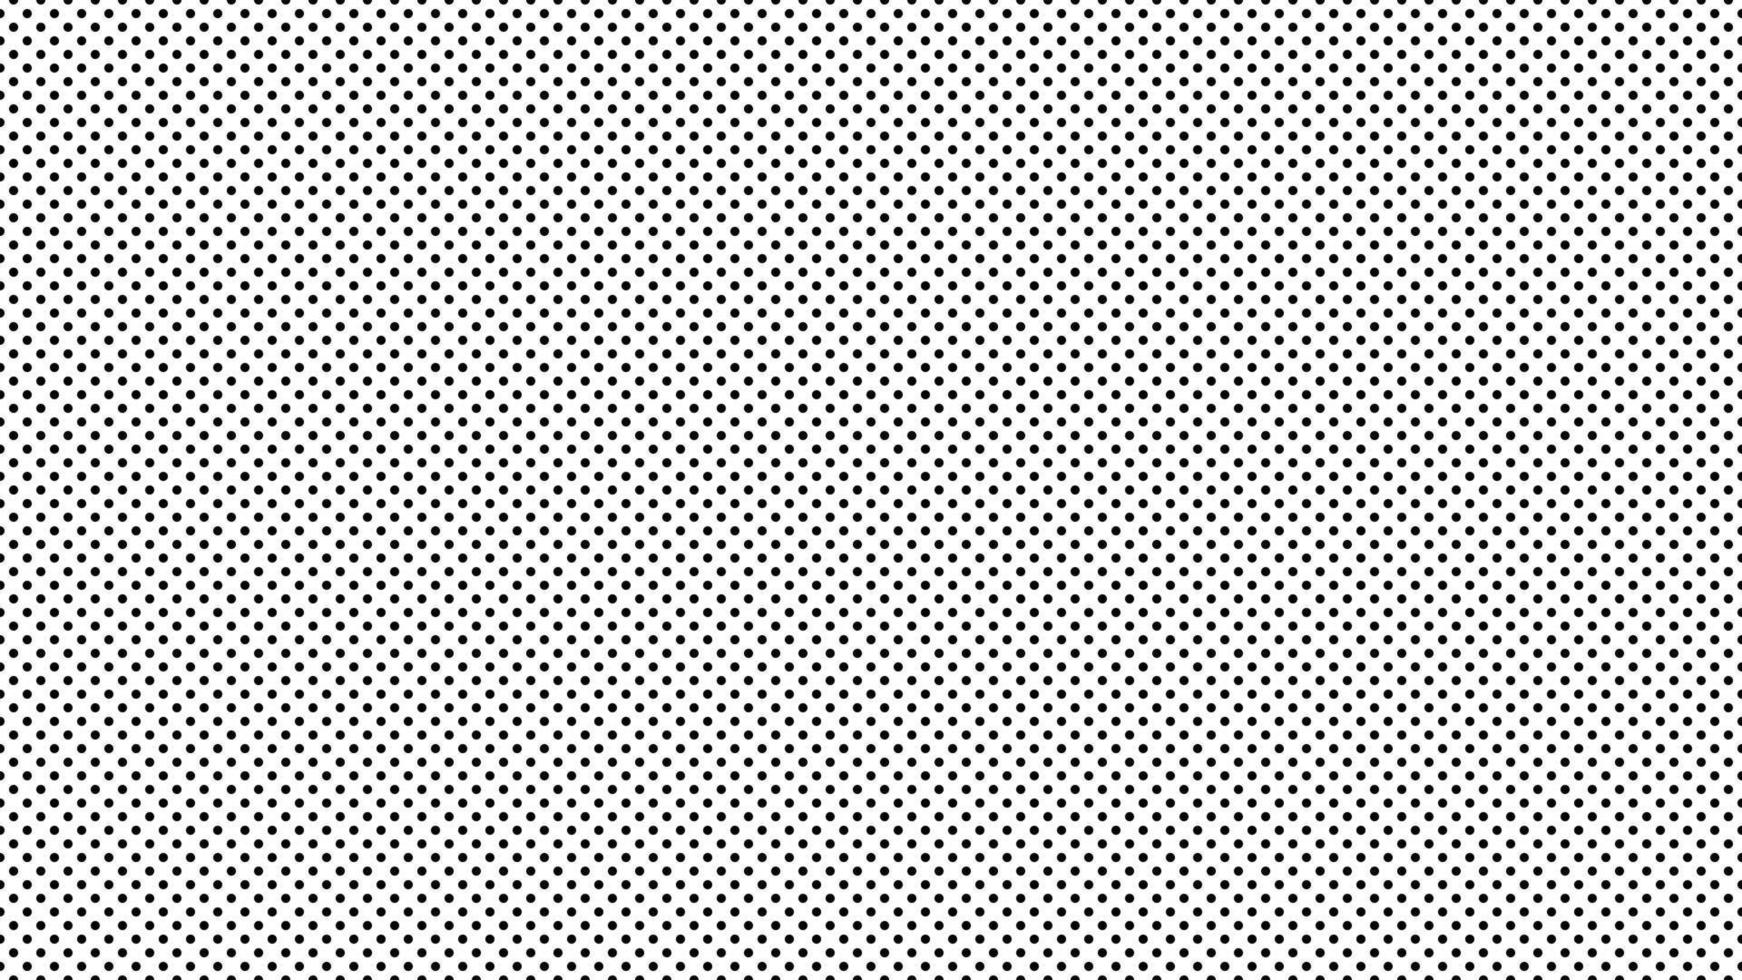 black color polka dots background vector